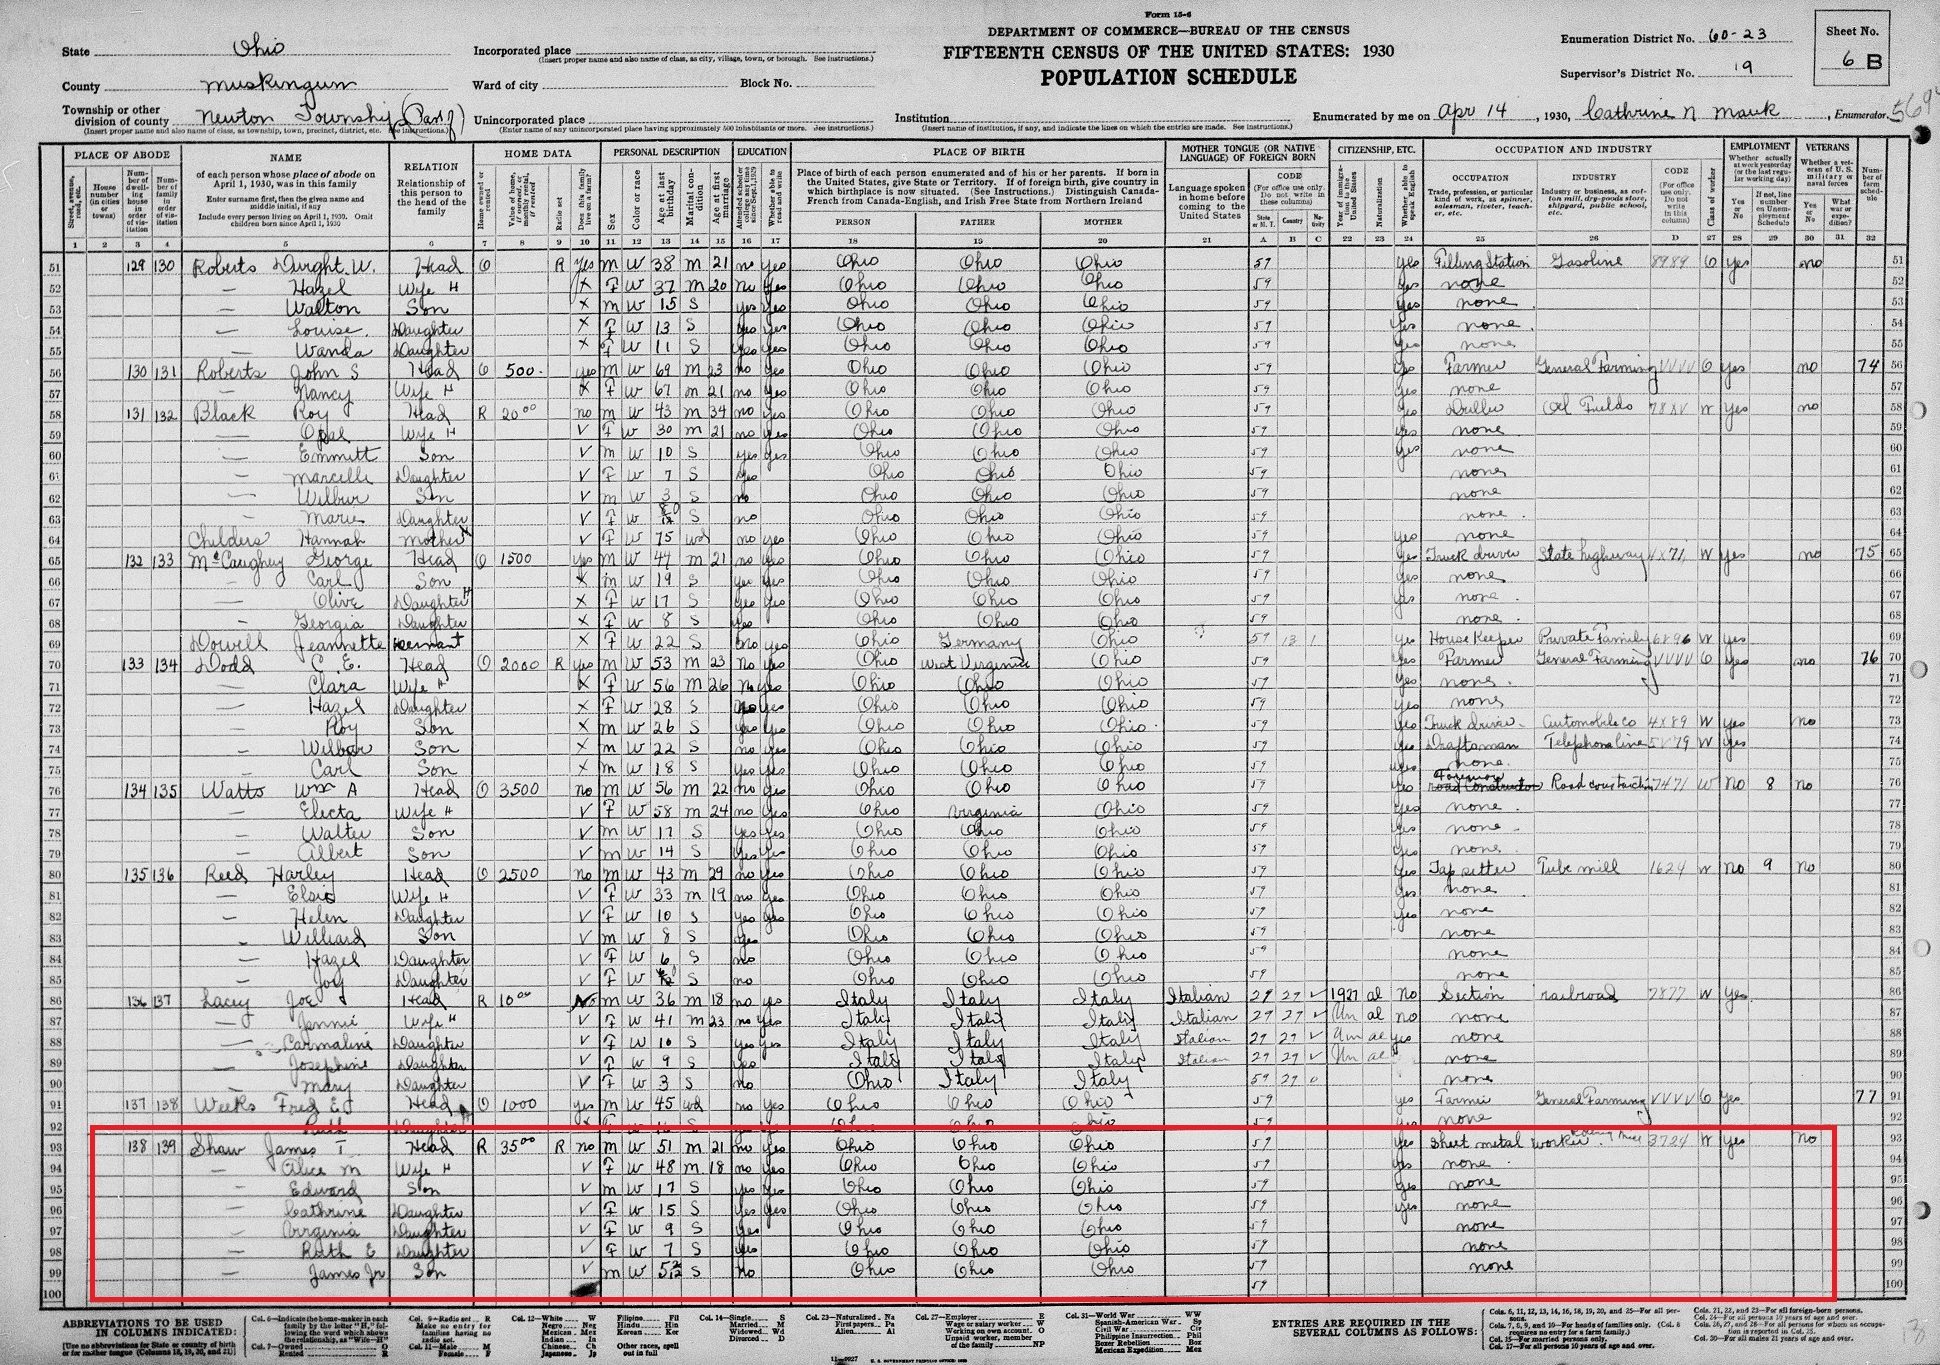  [Credit: MyHeritage 1930 U.S. Census Records]